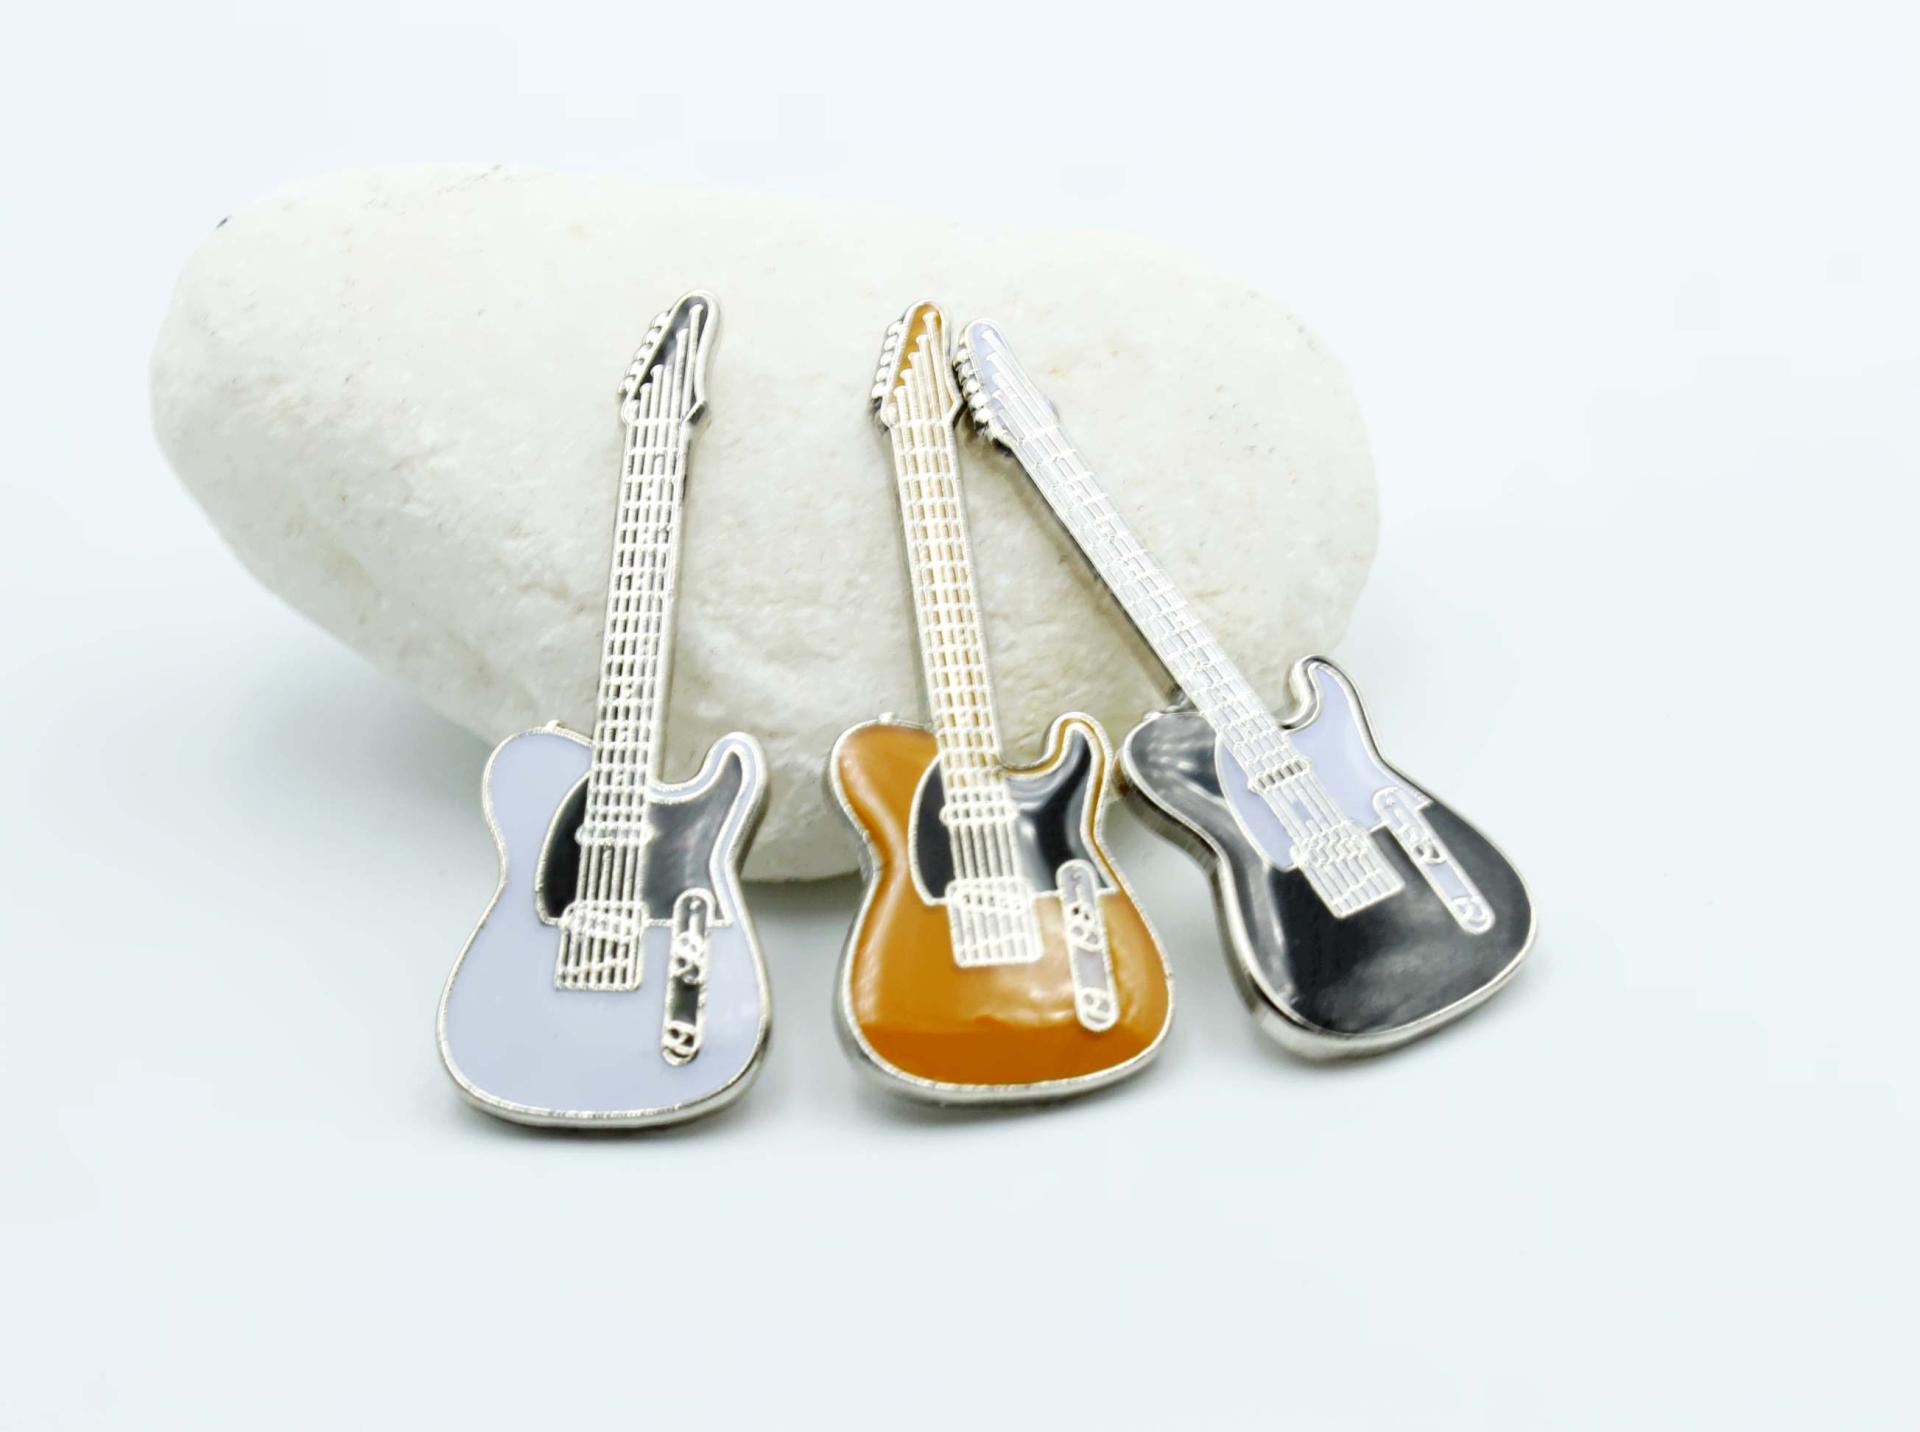 Fender Telecaster Style Guitar Pin White, Yellow or